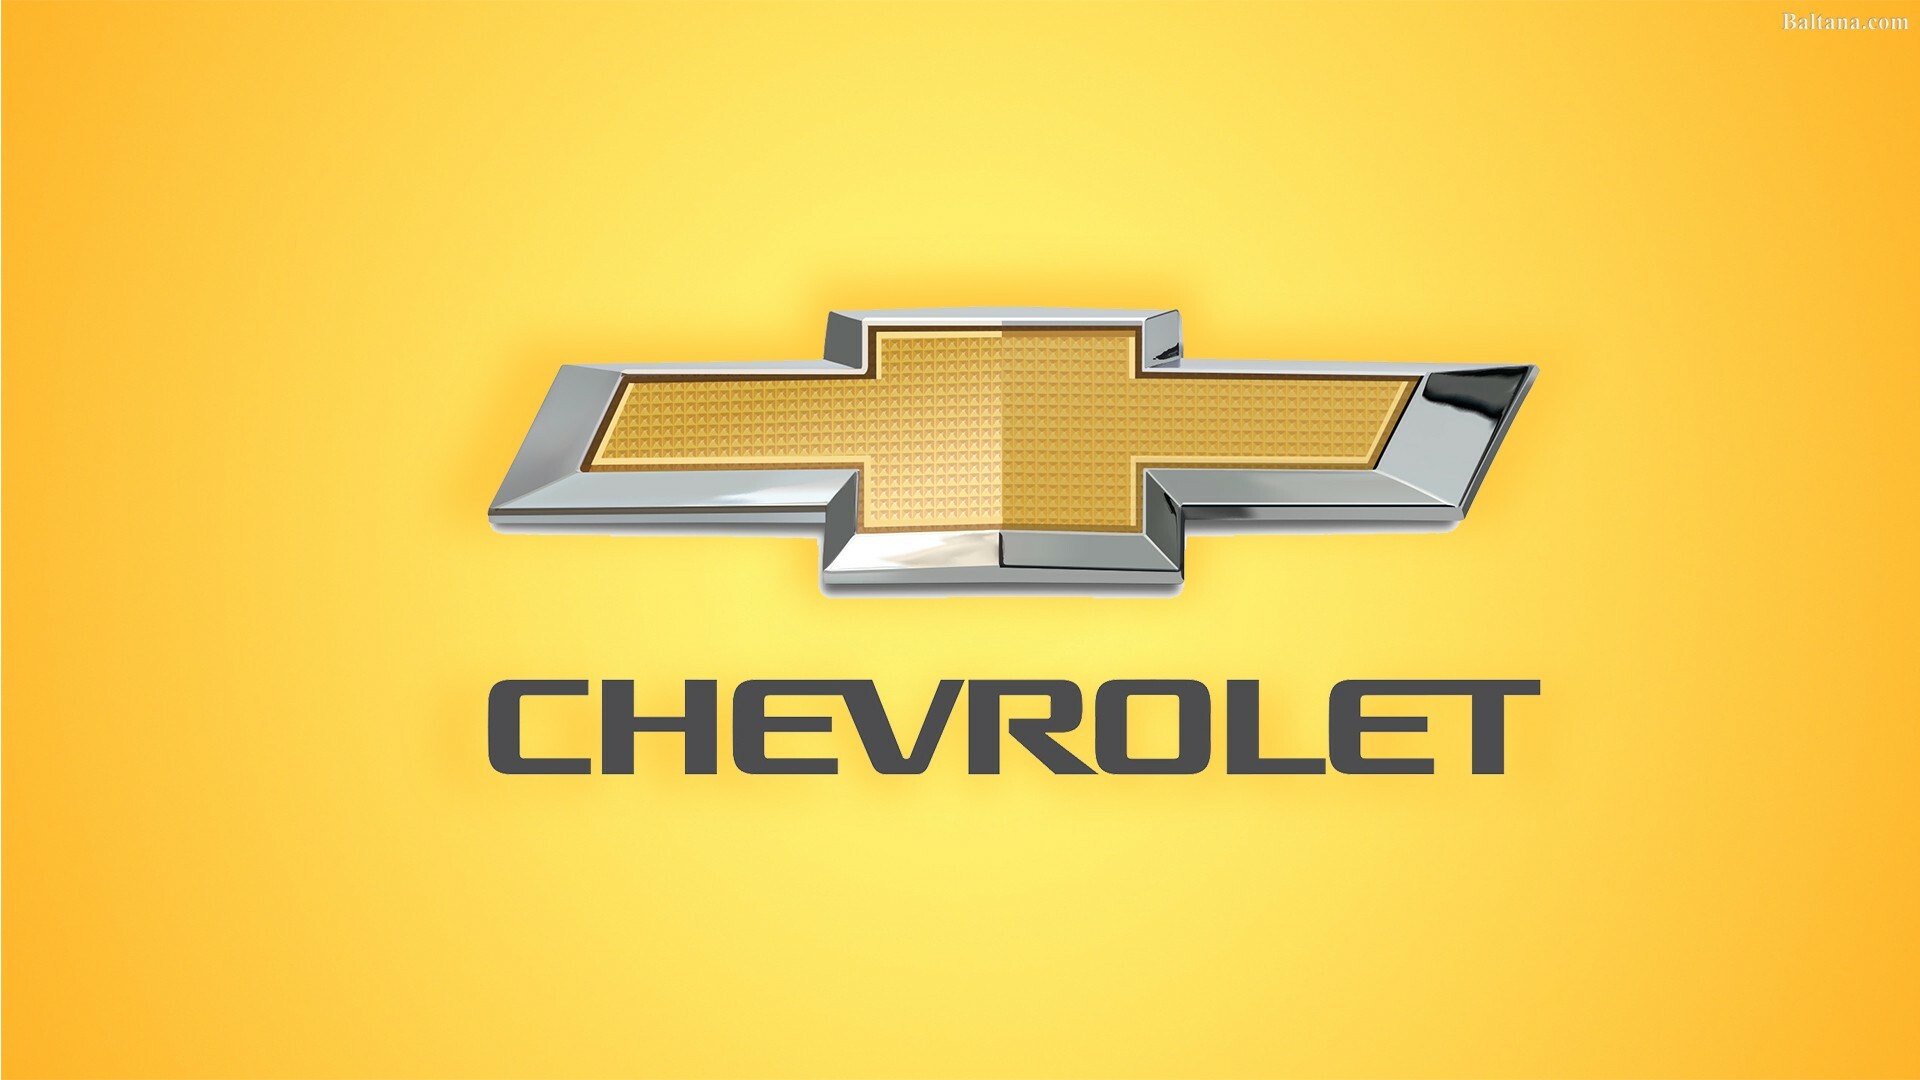 Chevrolet: Symbol, Emblem, Brand, Graphics, Bowtie Logo. 1920x1080 Full HD Wallpaper.